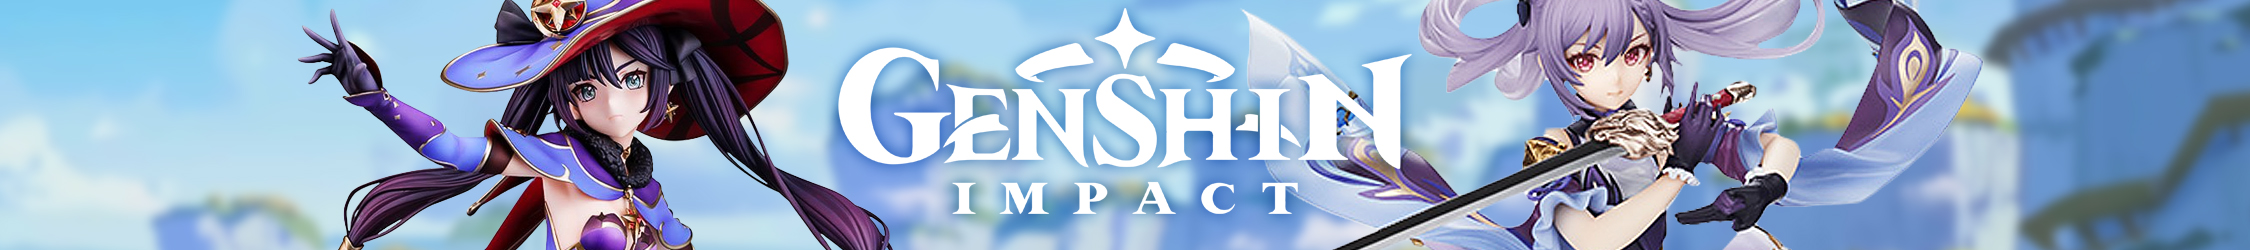 Ghenshin Impact